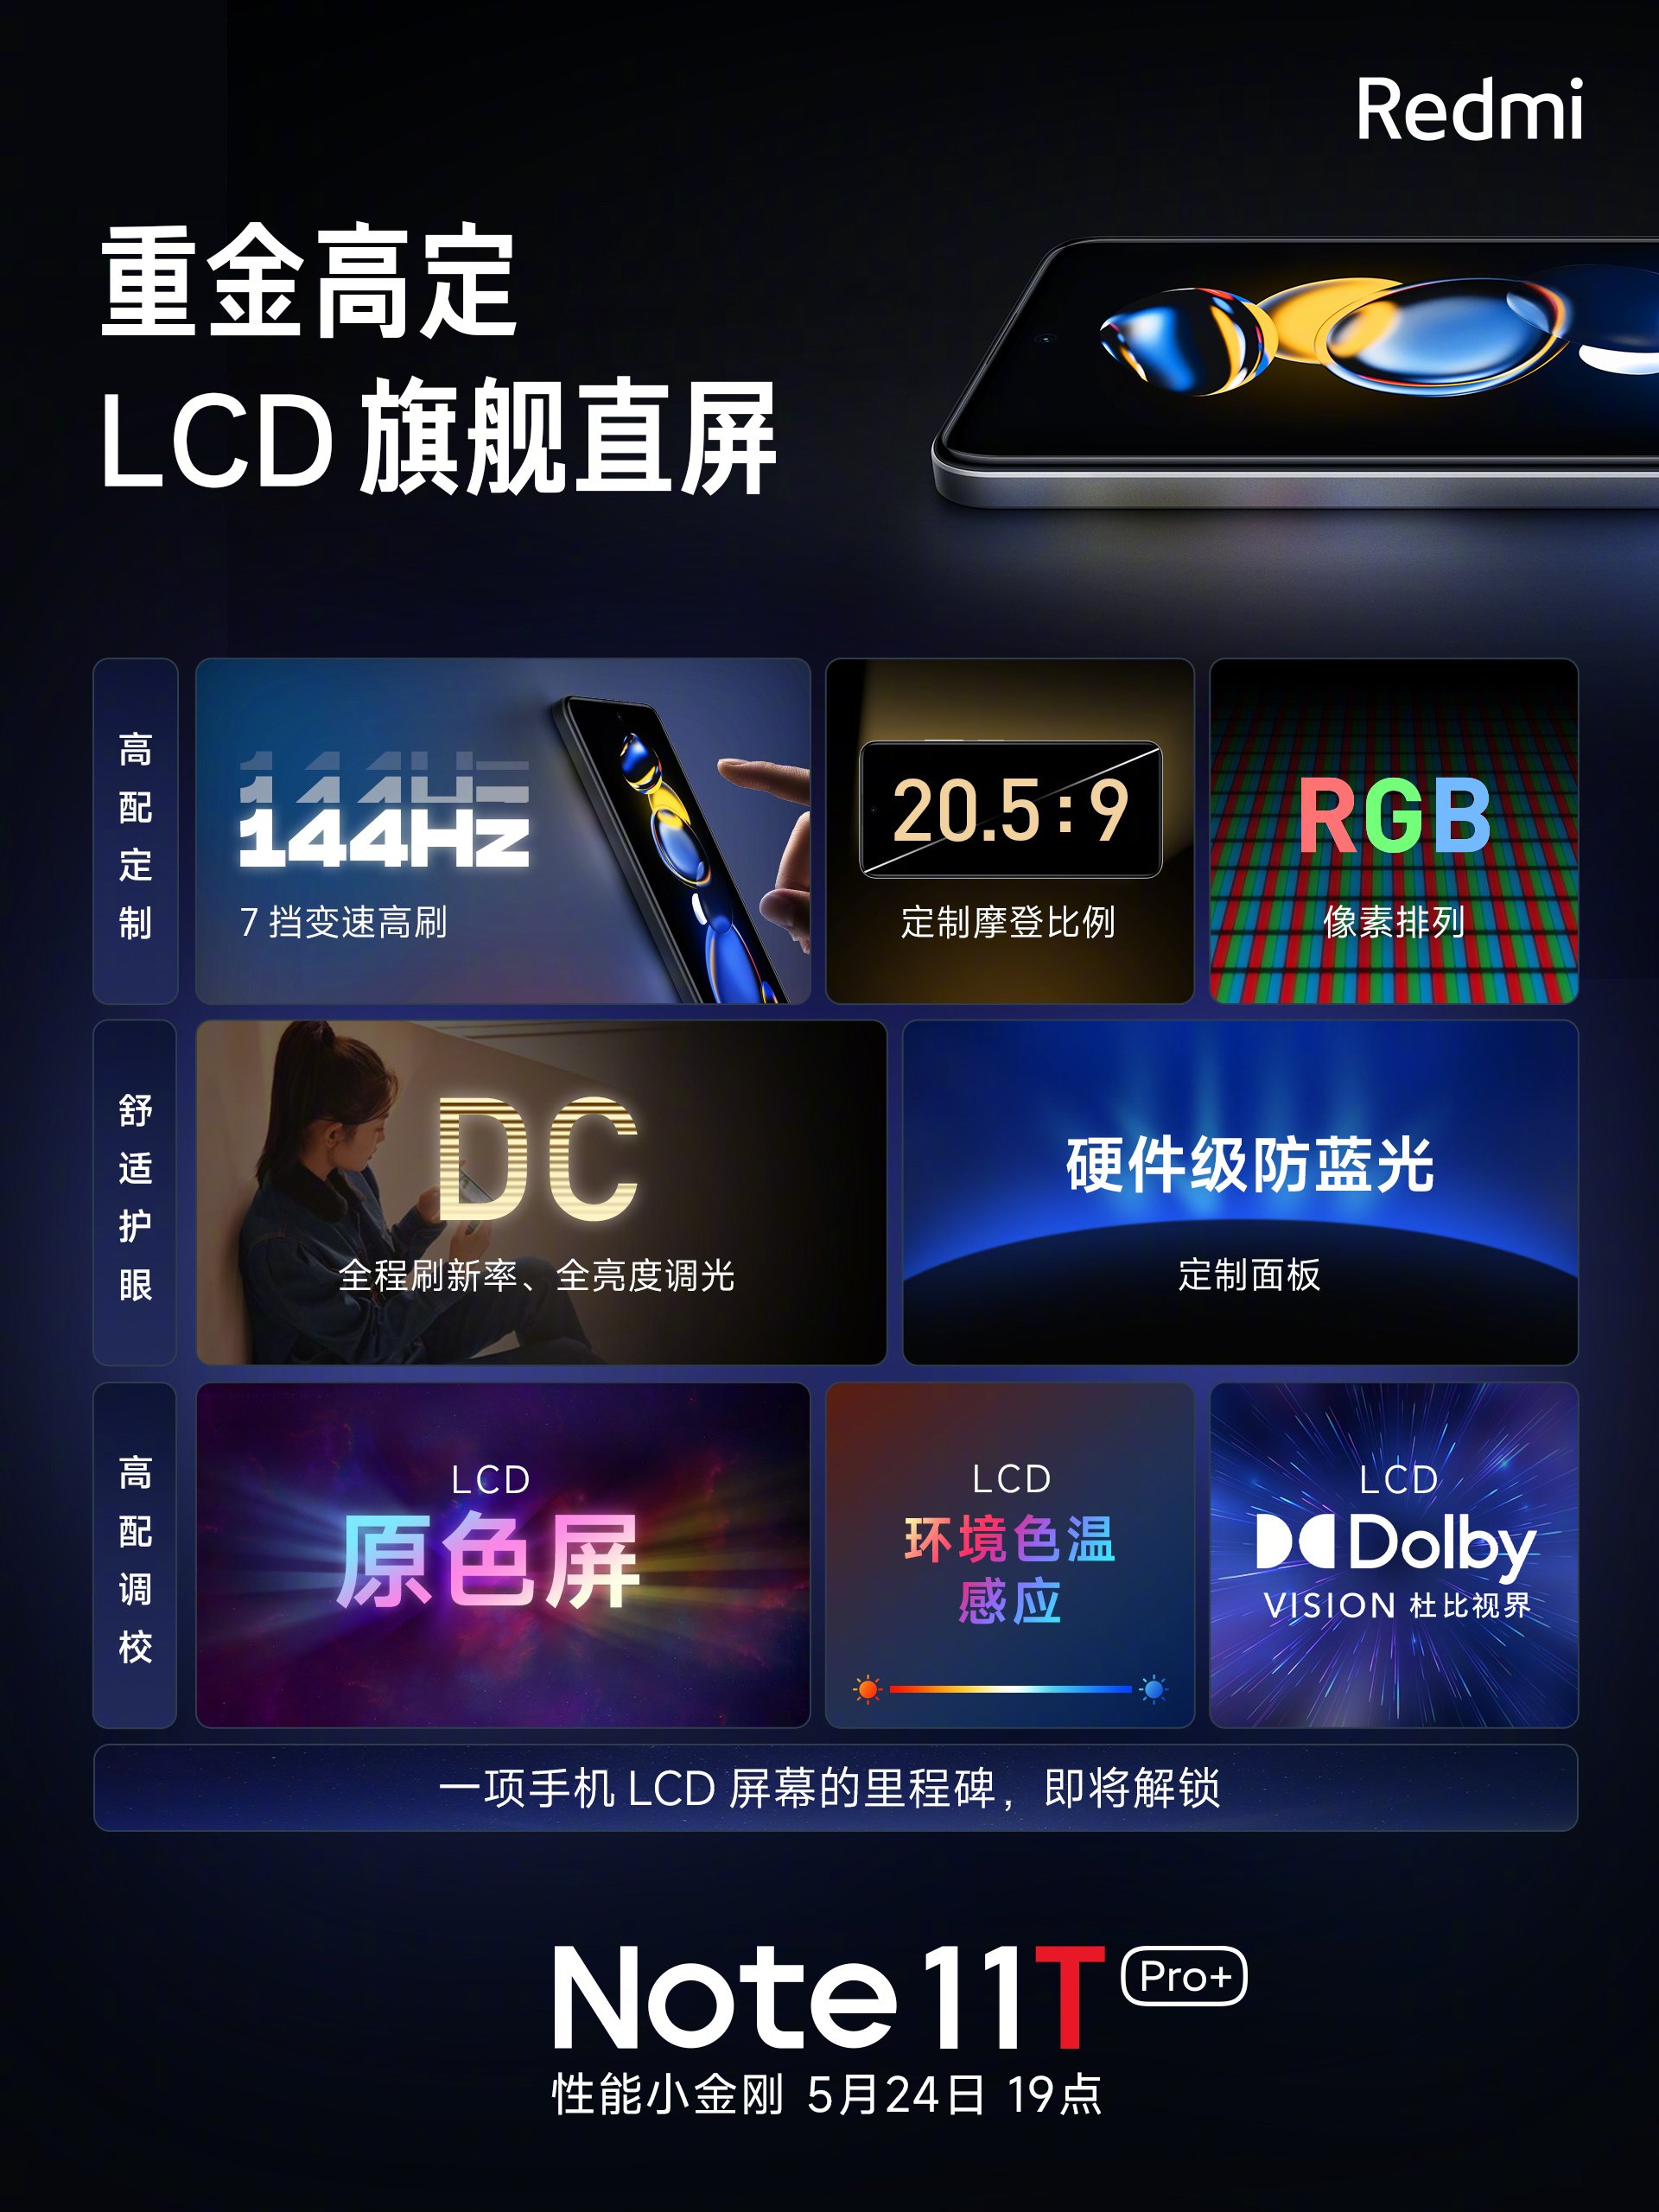 Redmi Note 11 Pro Plus 144Hz LCD